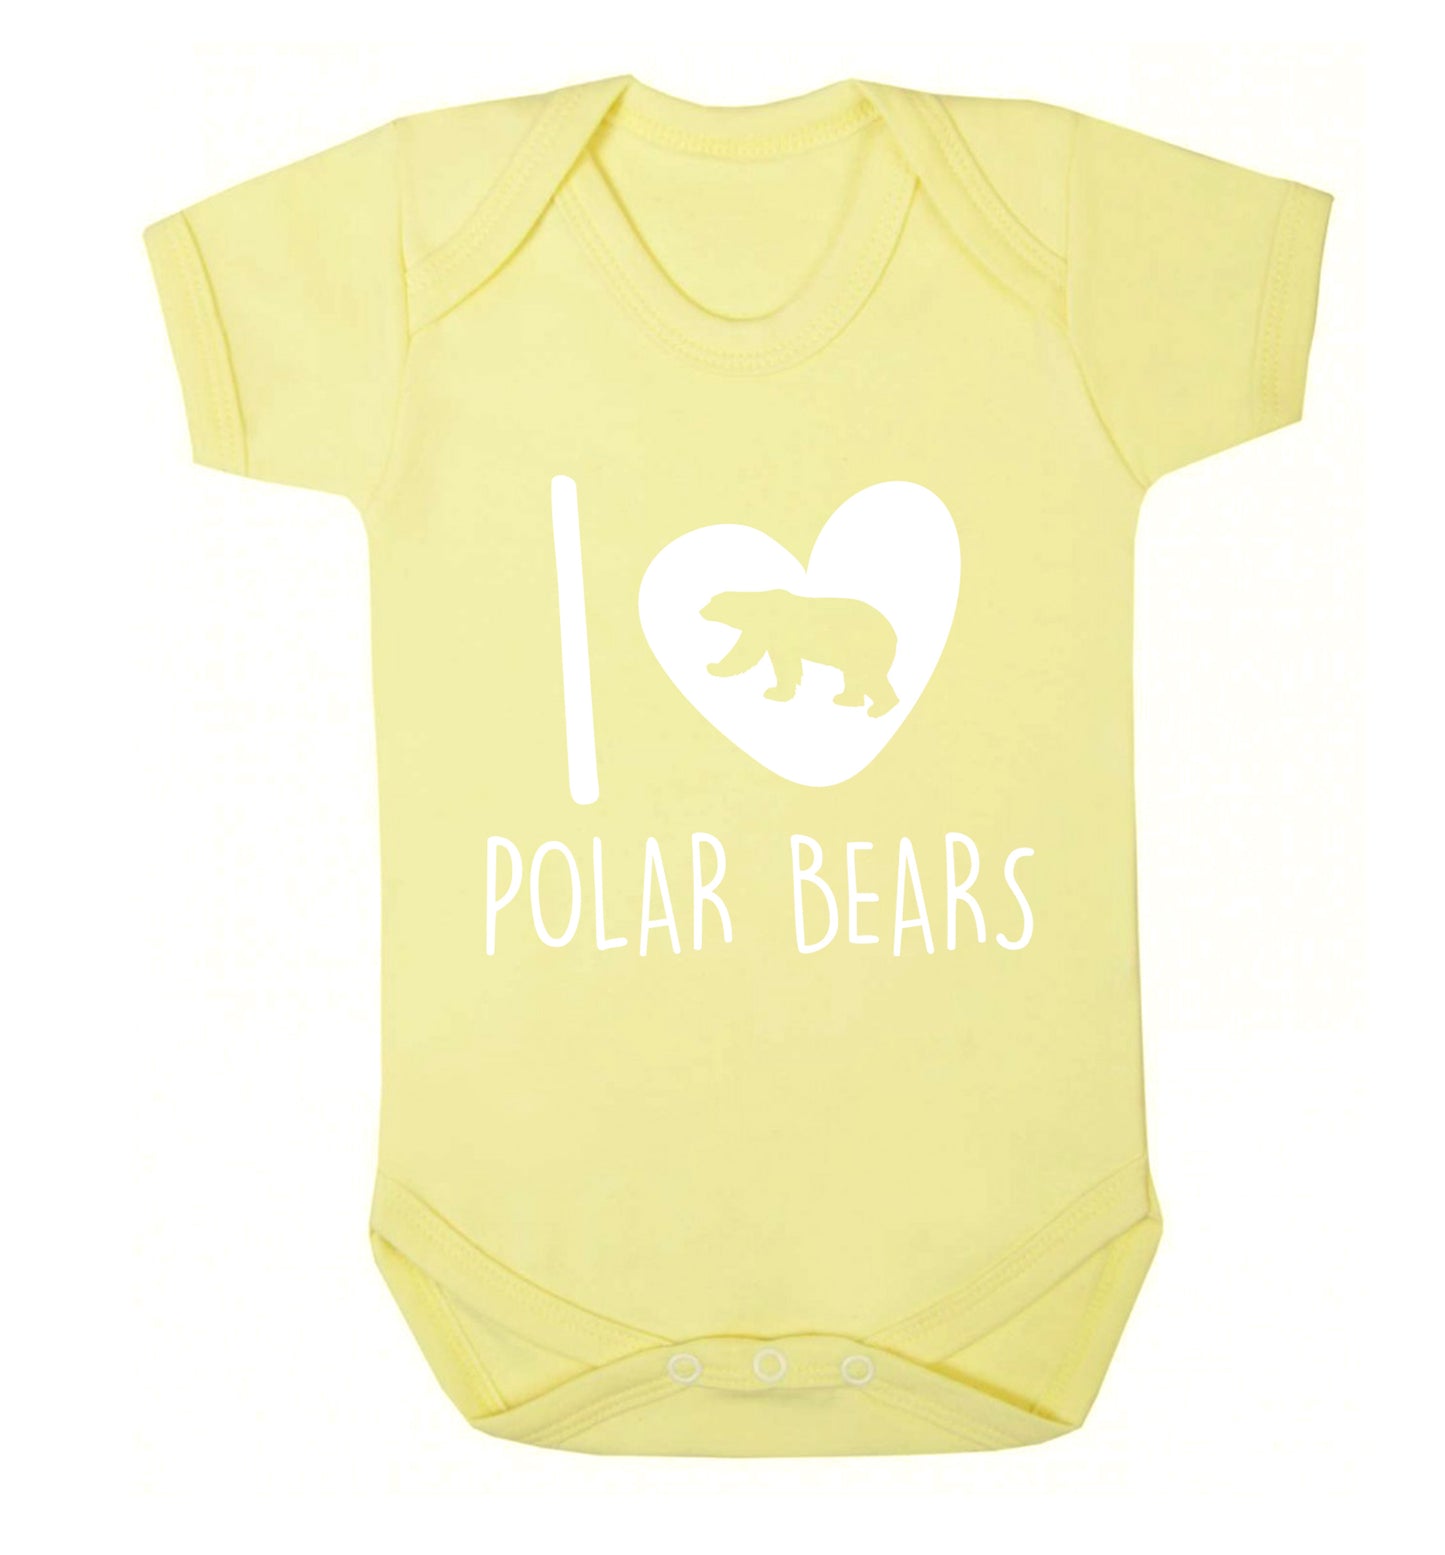 I Love Polar Bears Baby Vest pale yellow 18-24 months